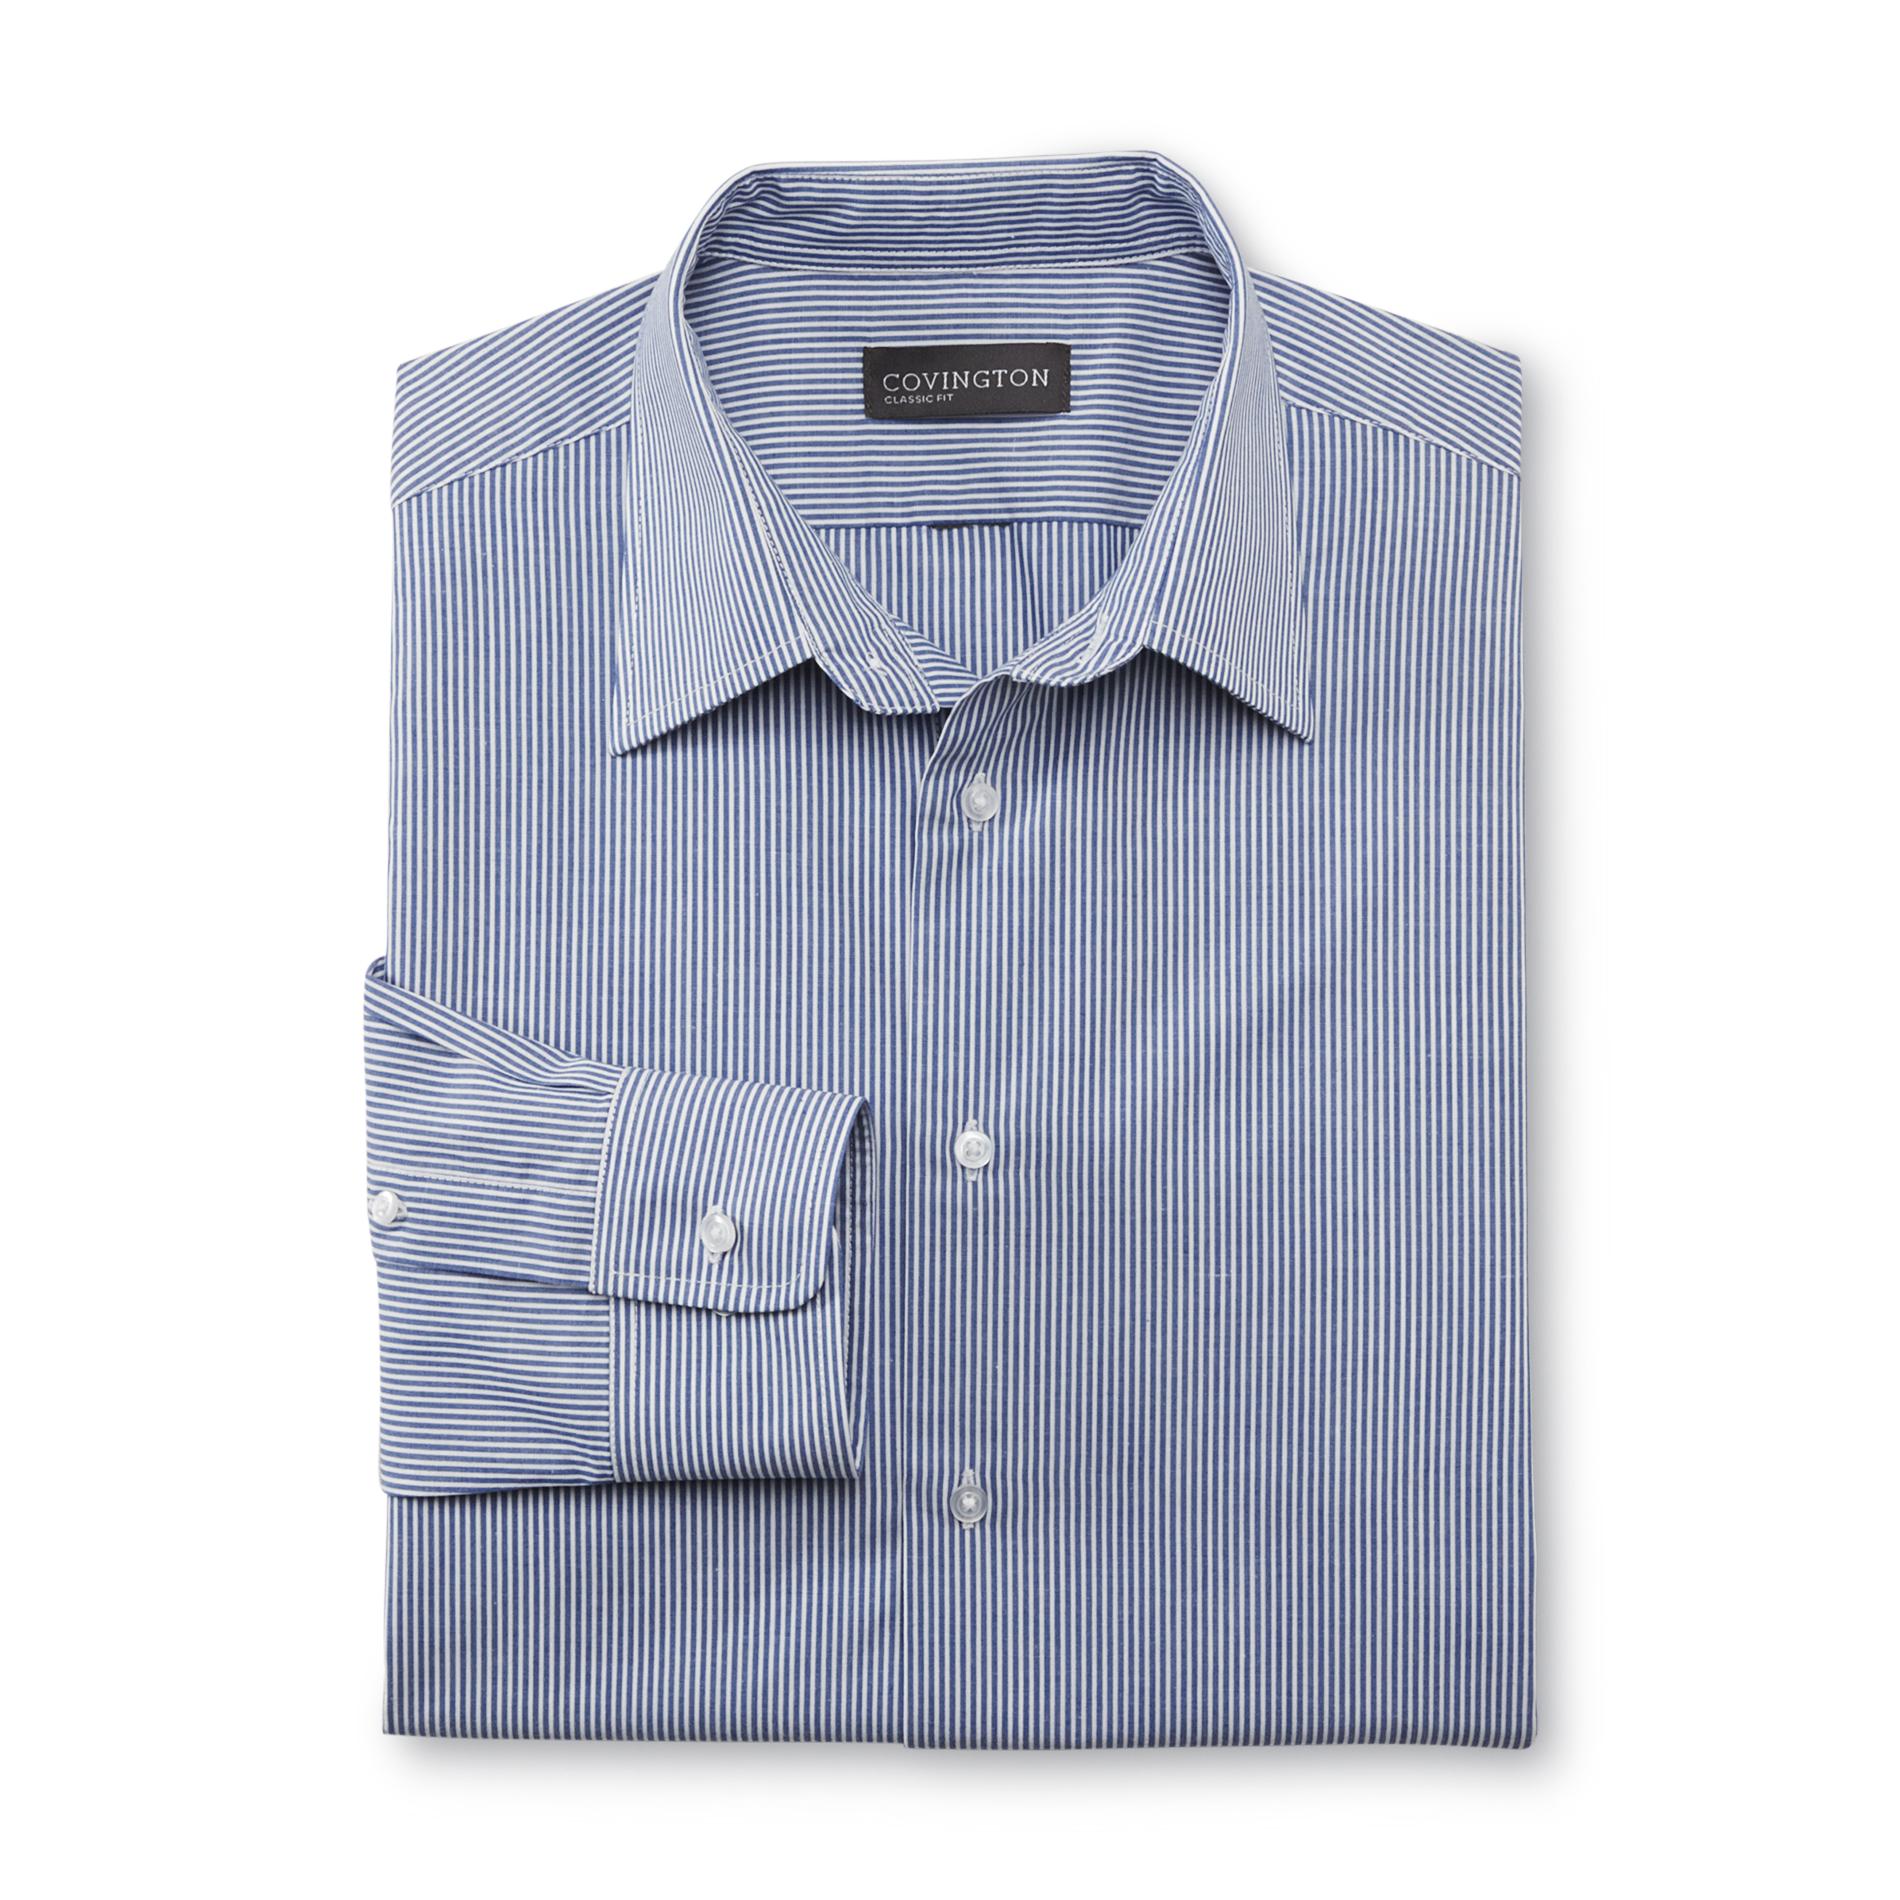 Covington Men's Dress Shirt - Pinstriped